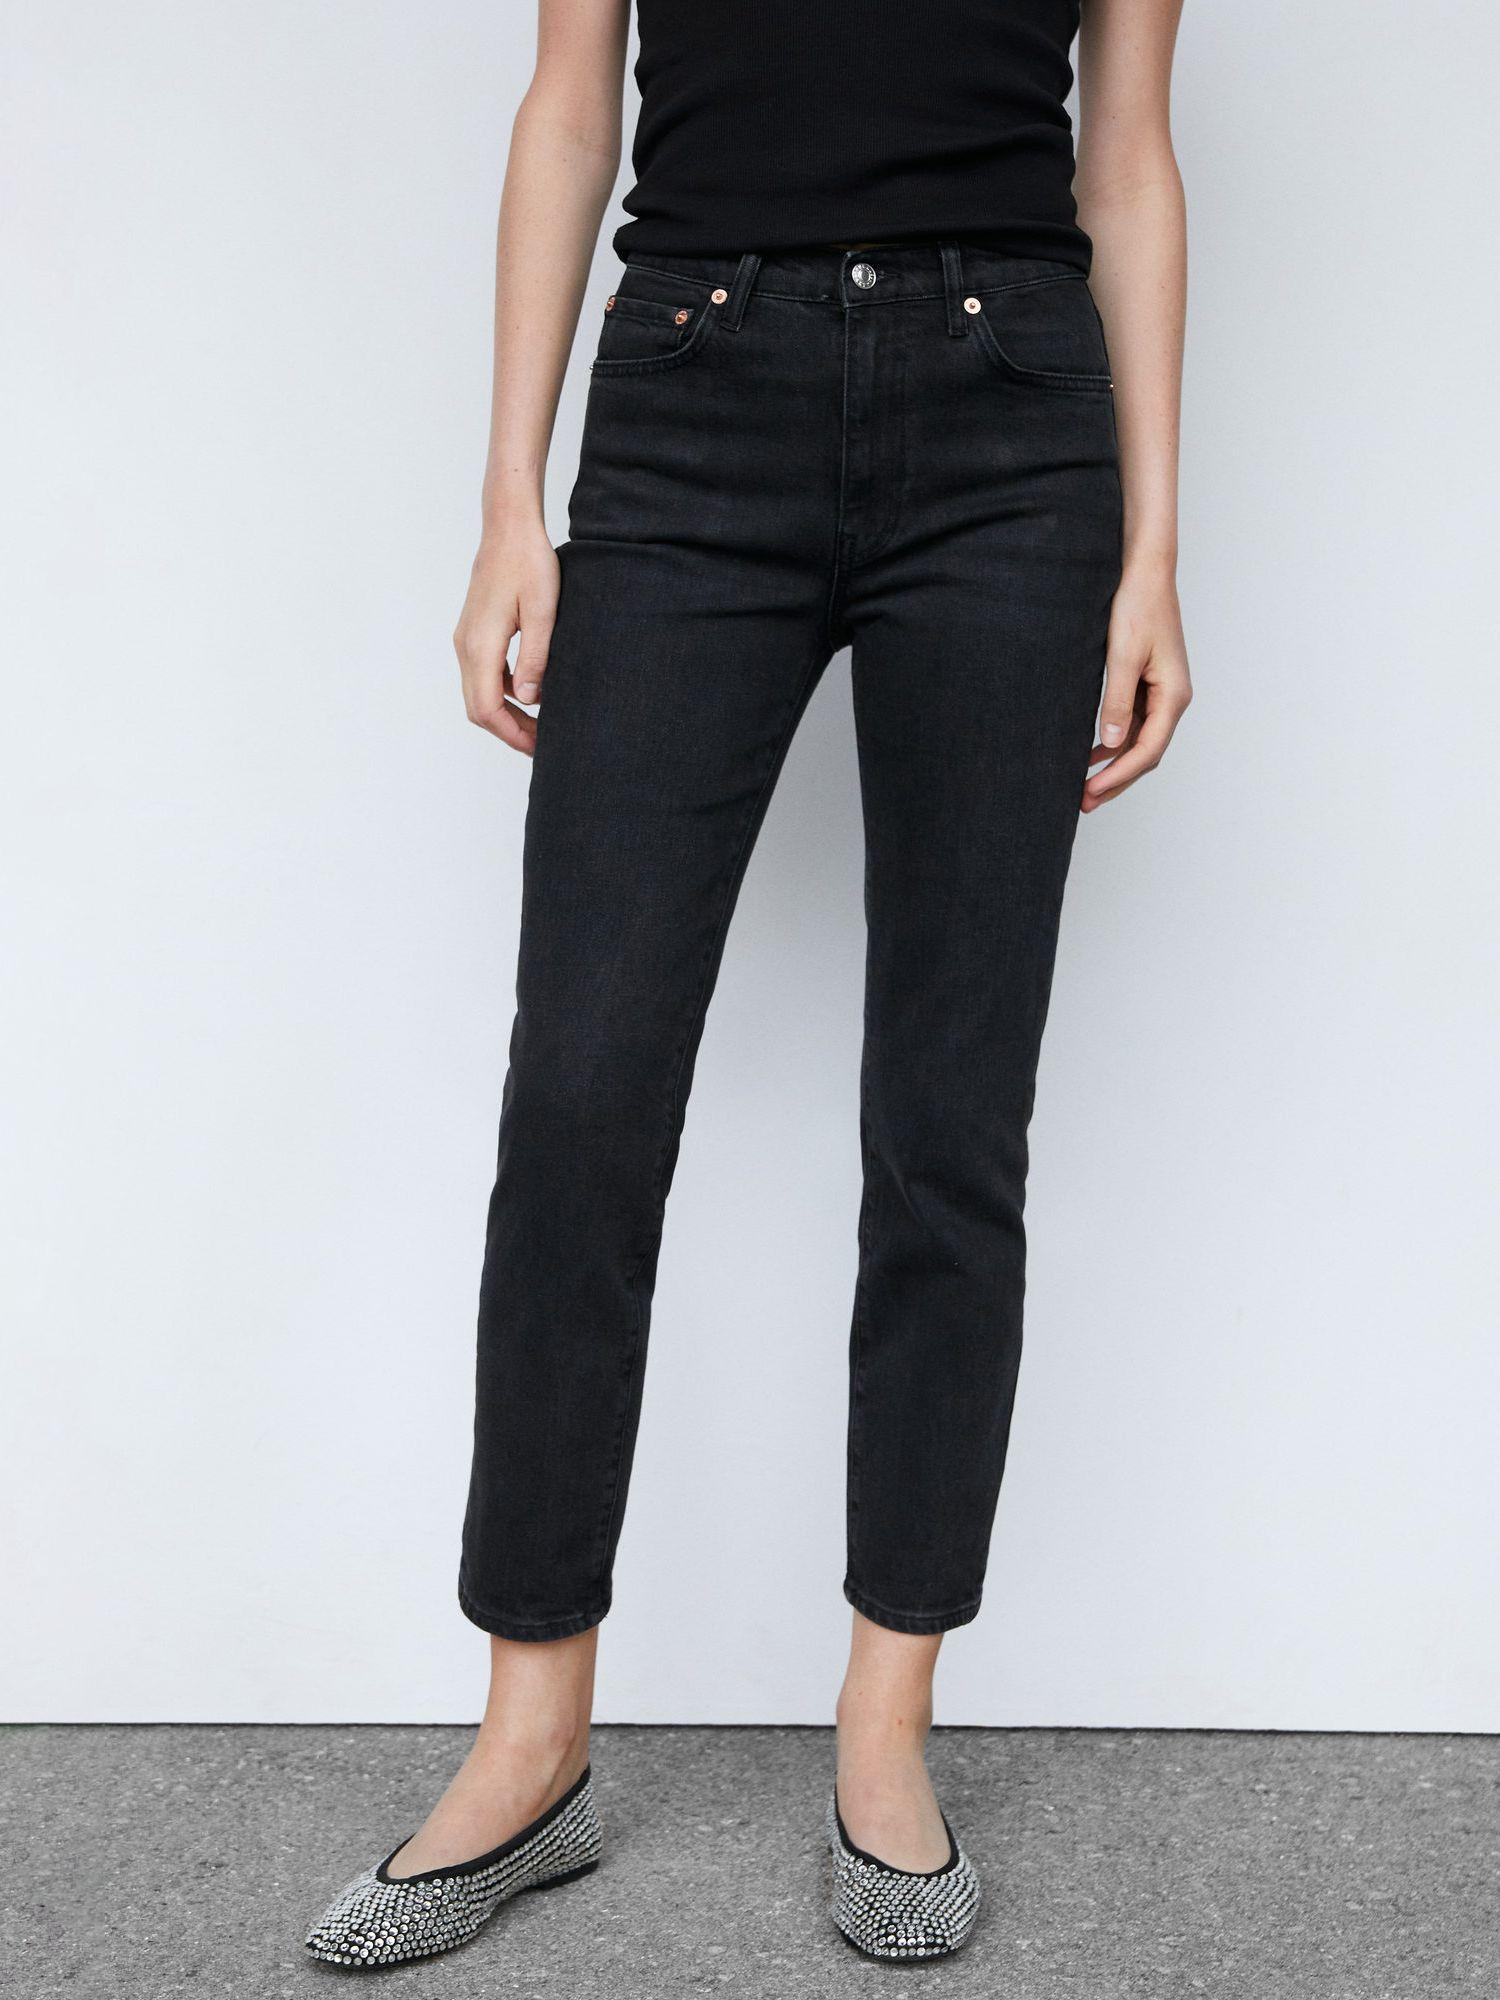 Mango Claudia Slim Leg Cropped Jeans in Black | Lyst UK